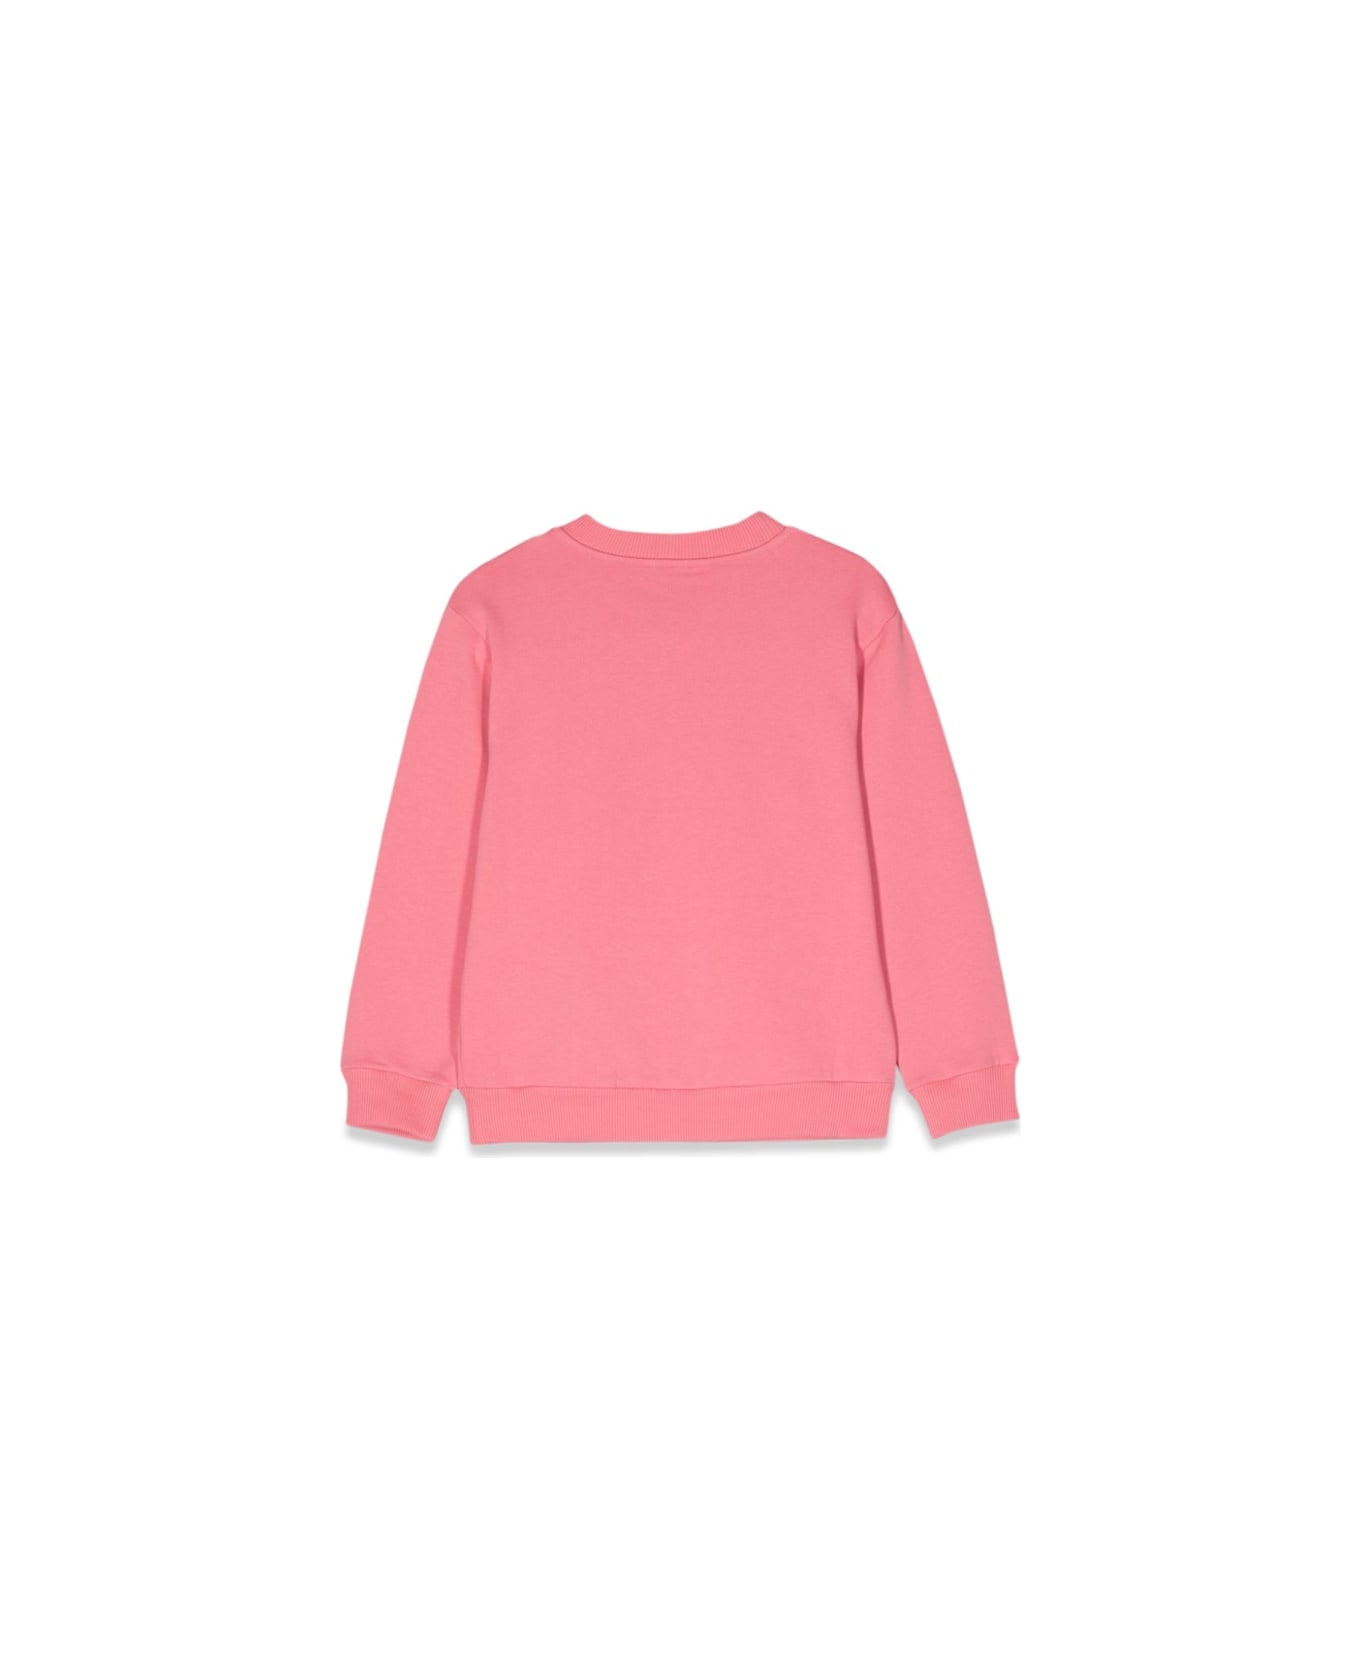 Dolce & Gabbana Giroc.man.lung Sweatshirt - PINK ニットウェア＆スウェットシャツ